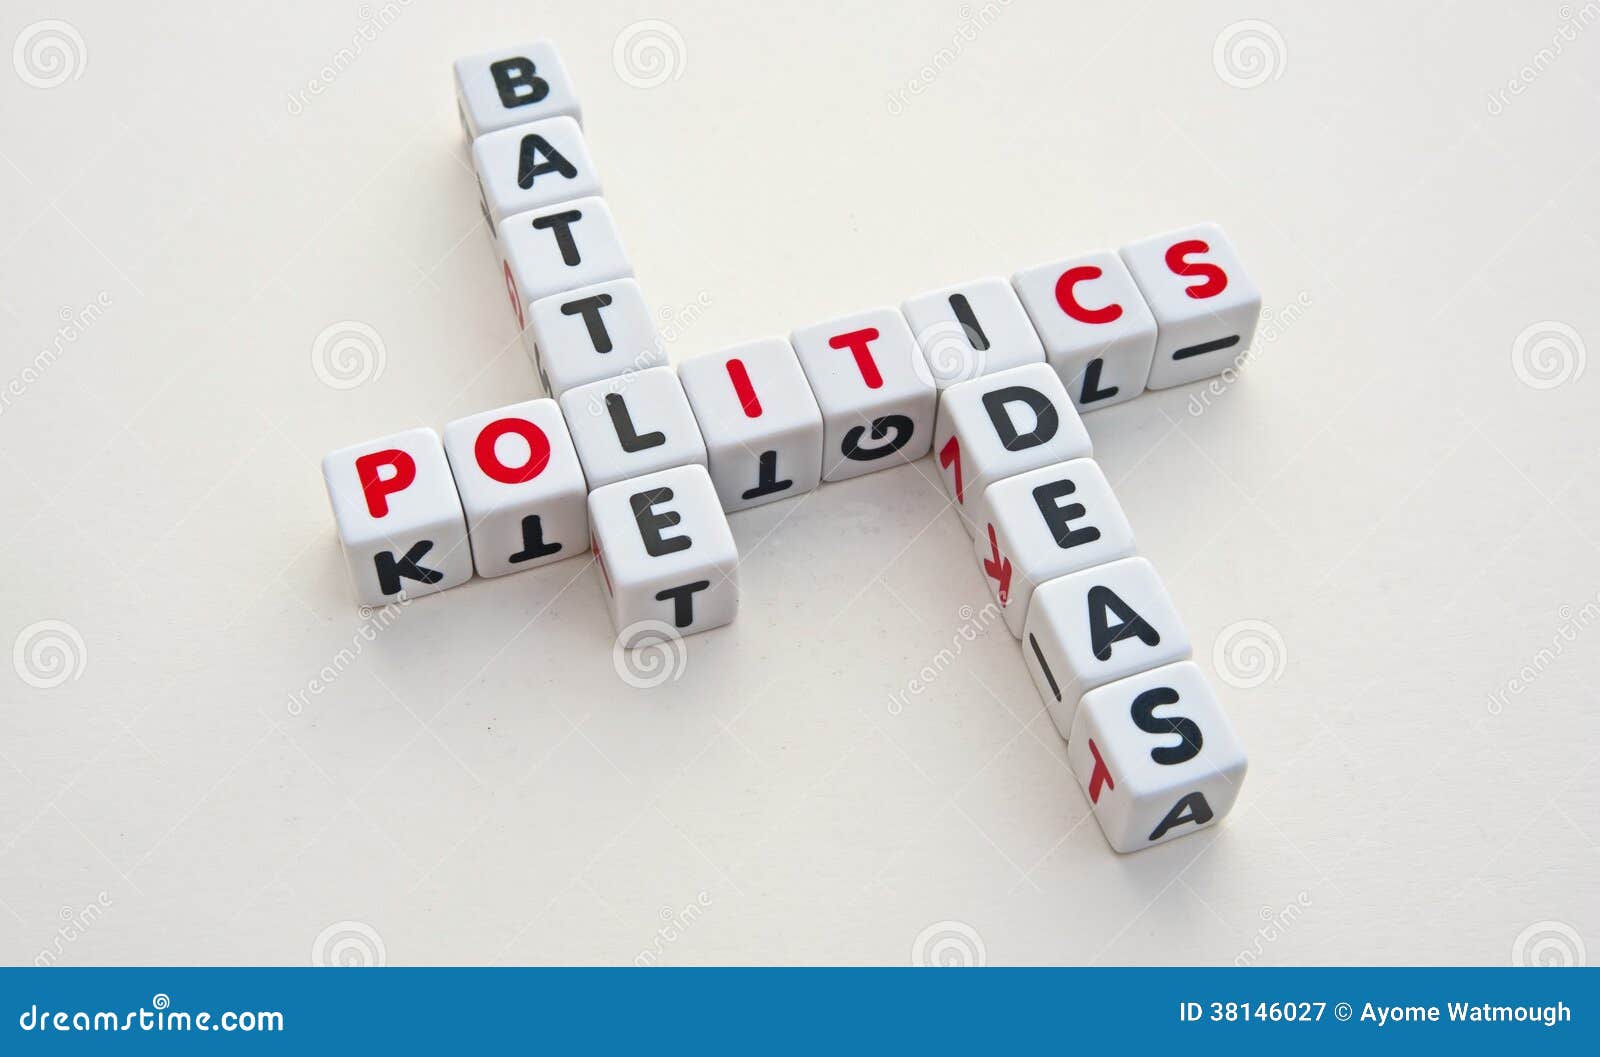 politics: battle for ideas